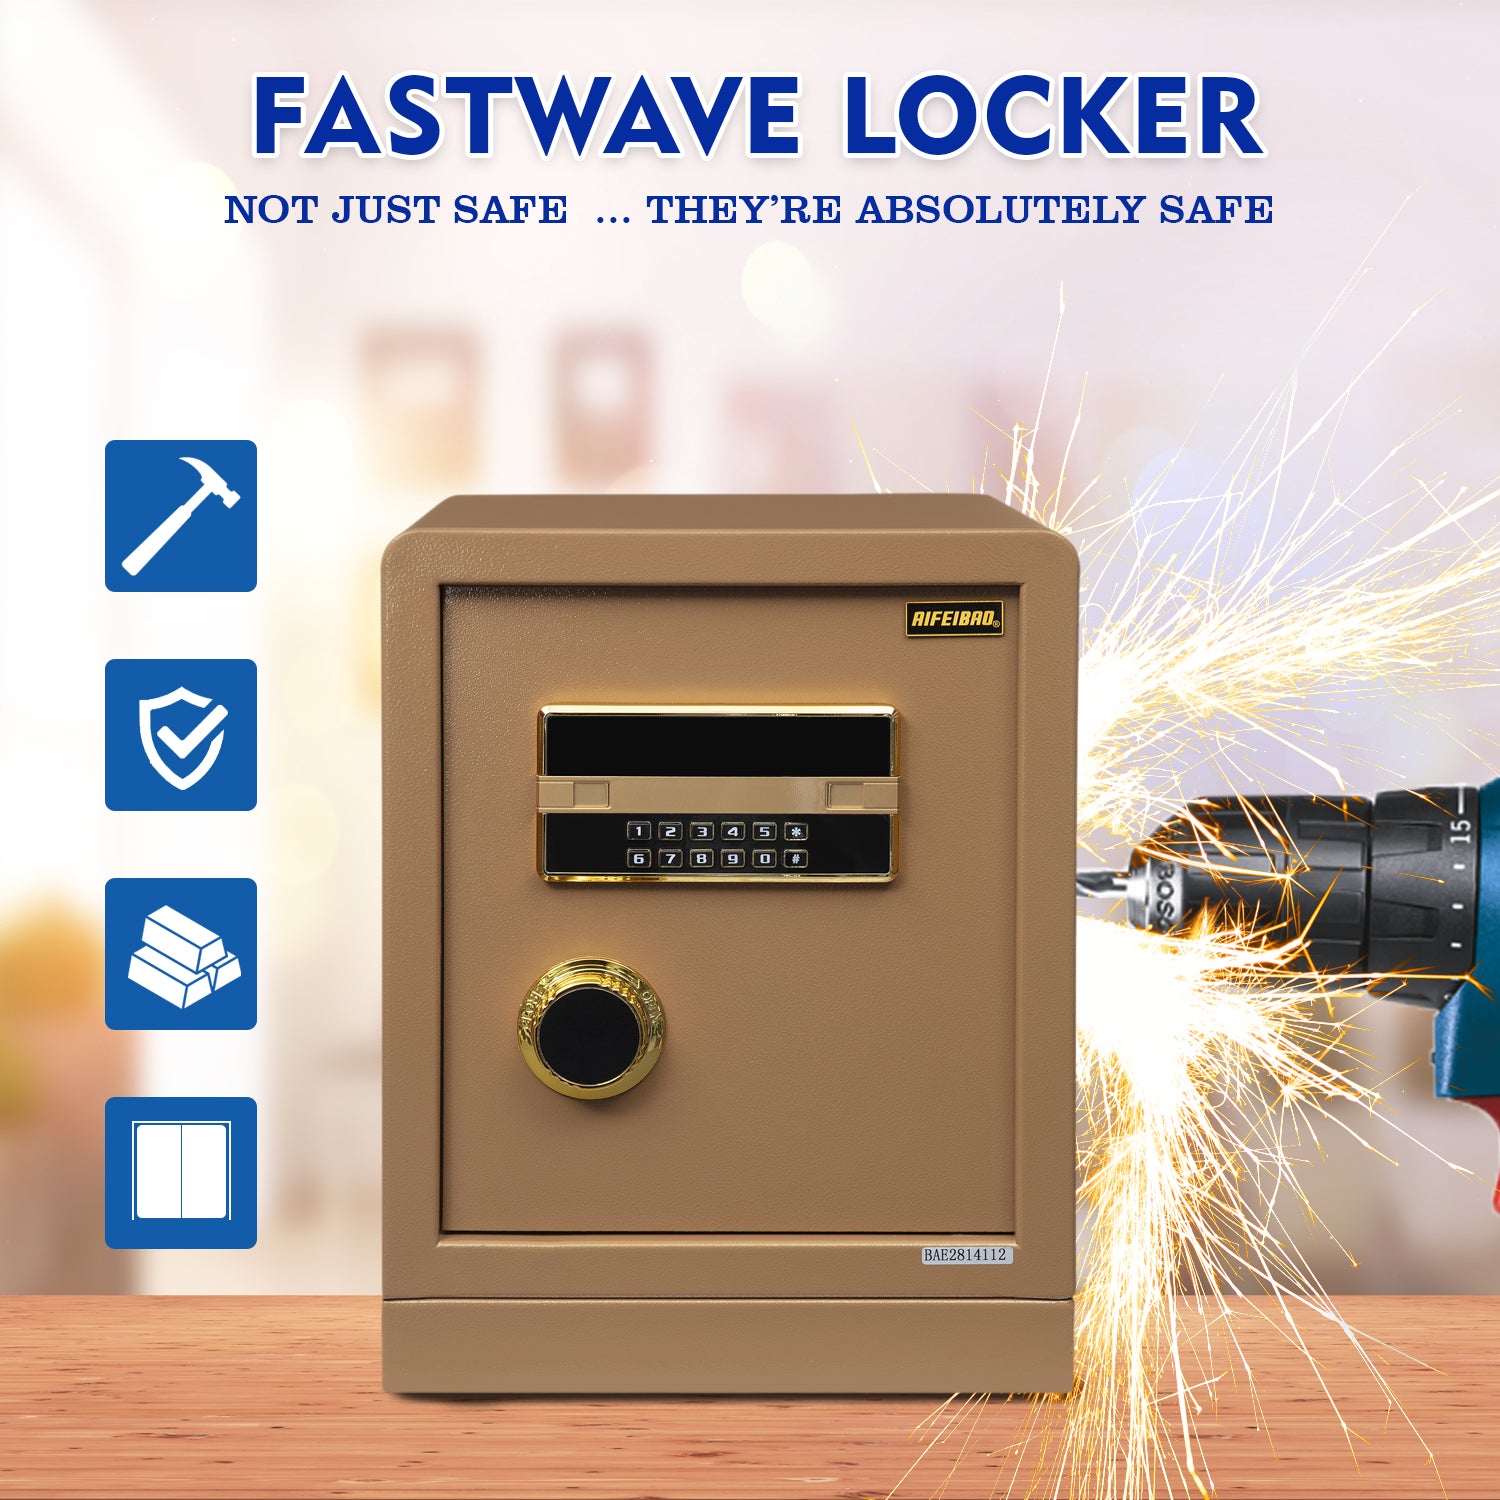 Digital Security Locker NW-KG-33 Golden